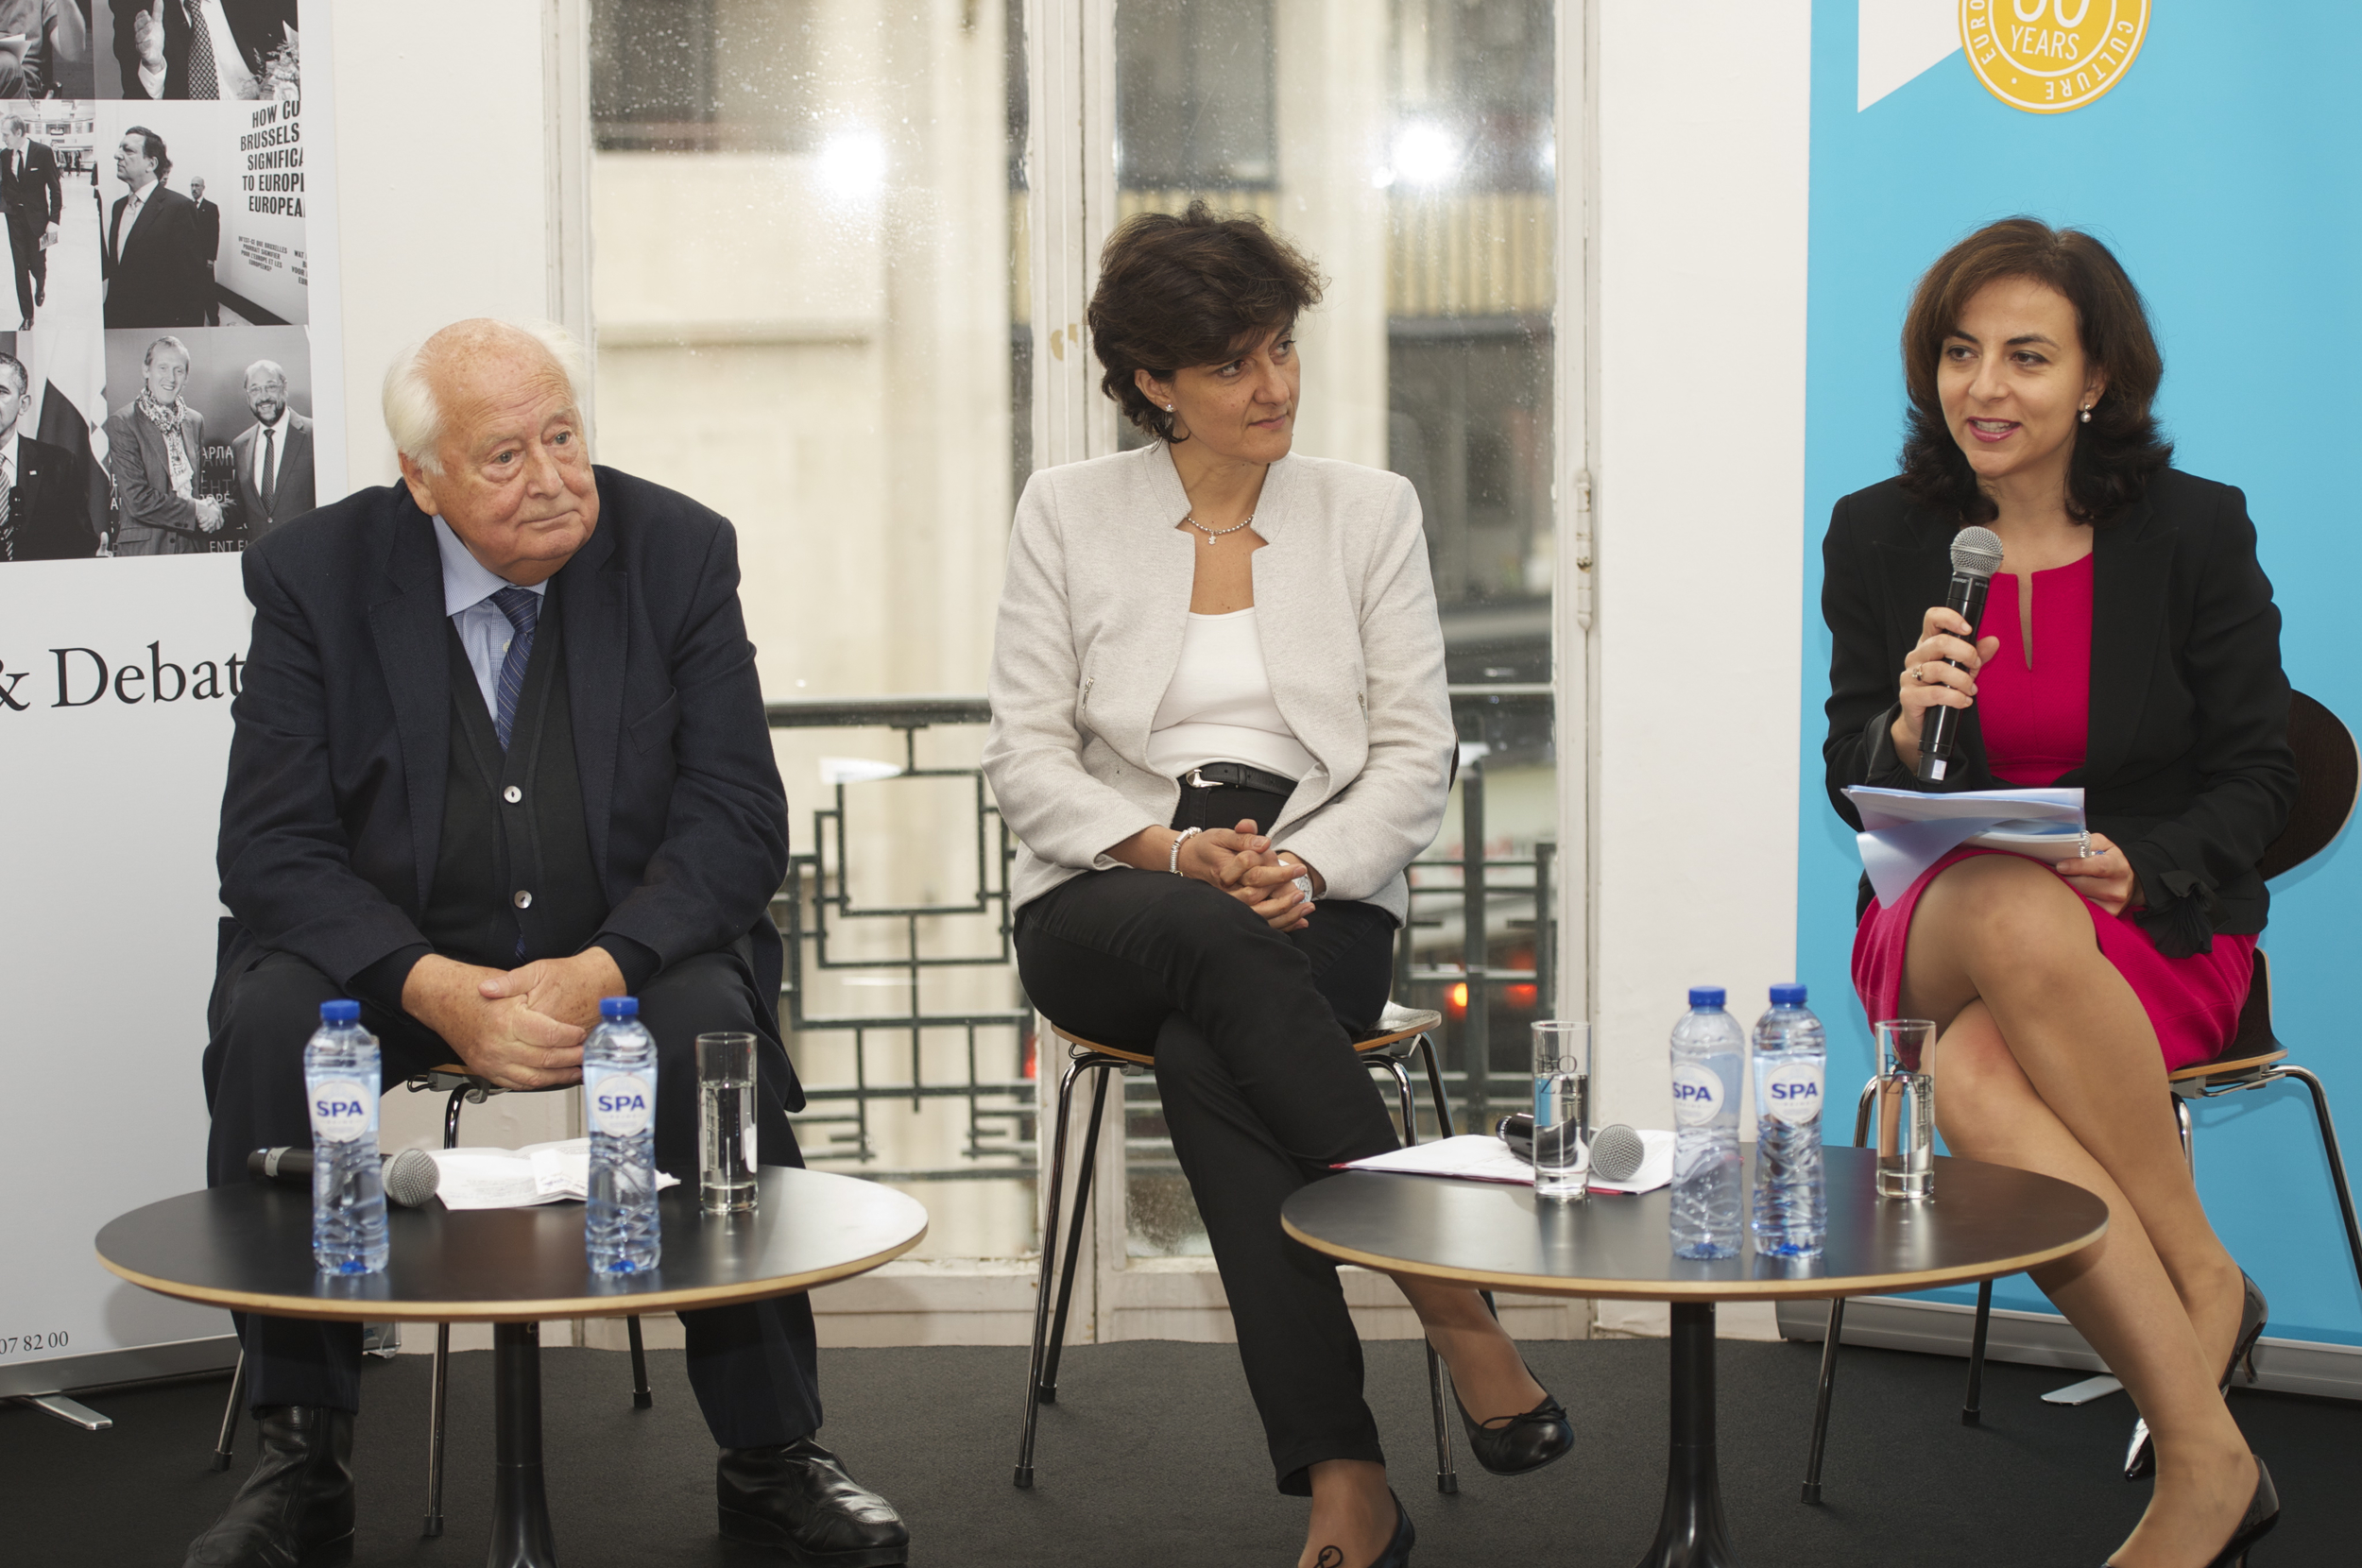  Raymond Georis, Sylvie Goulard and Vanessa Mock at the Historic Speech debate at BOZAR.&nbsp;Photo ©Yves Gervais 